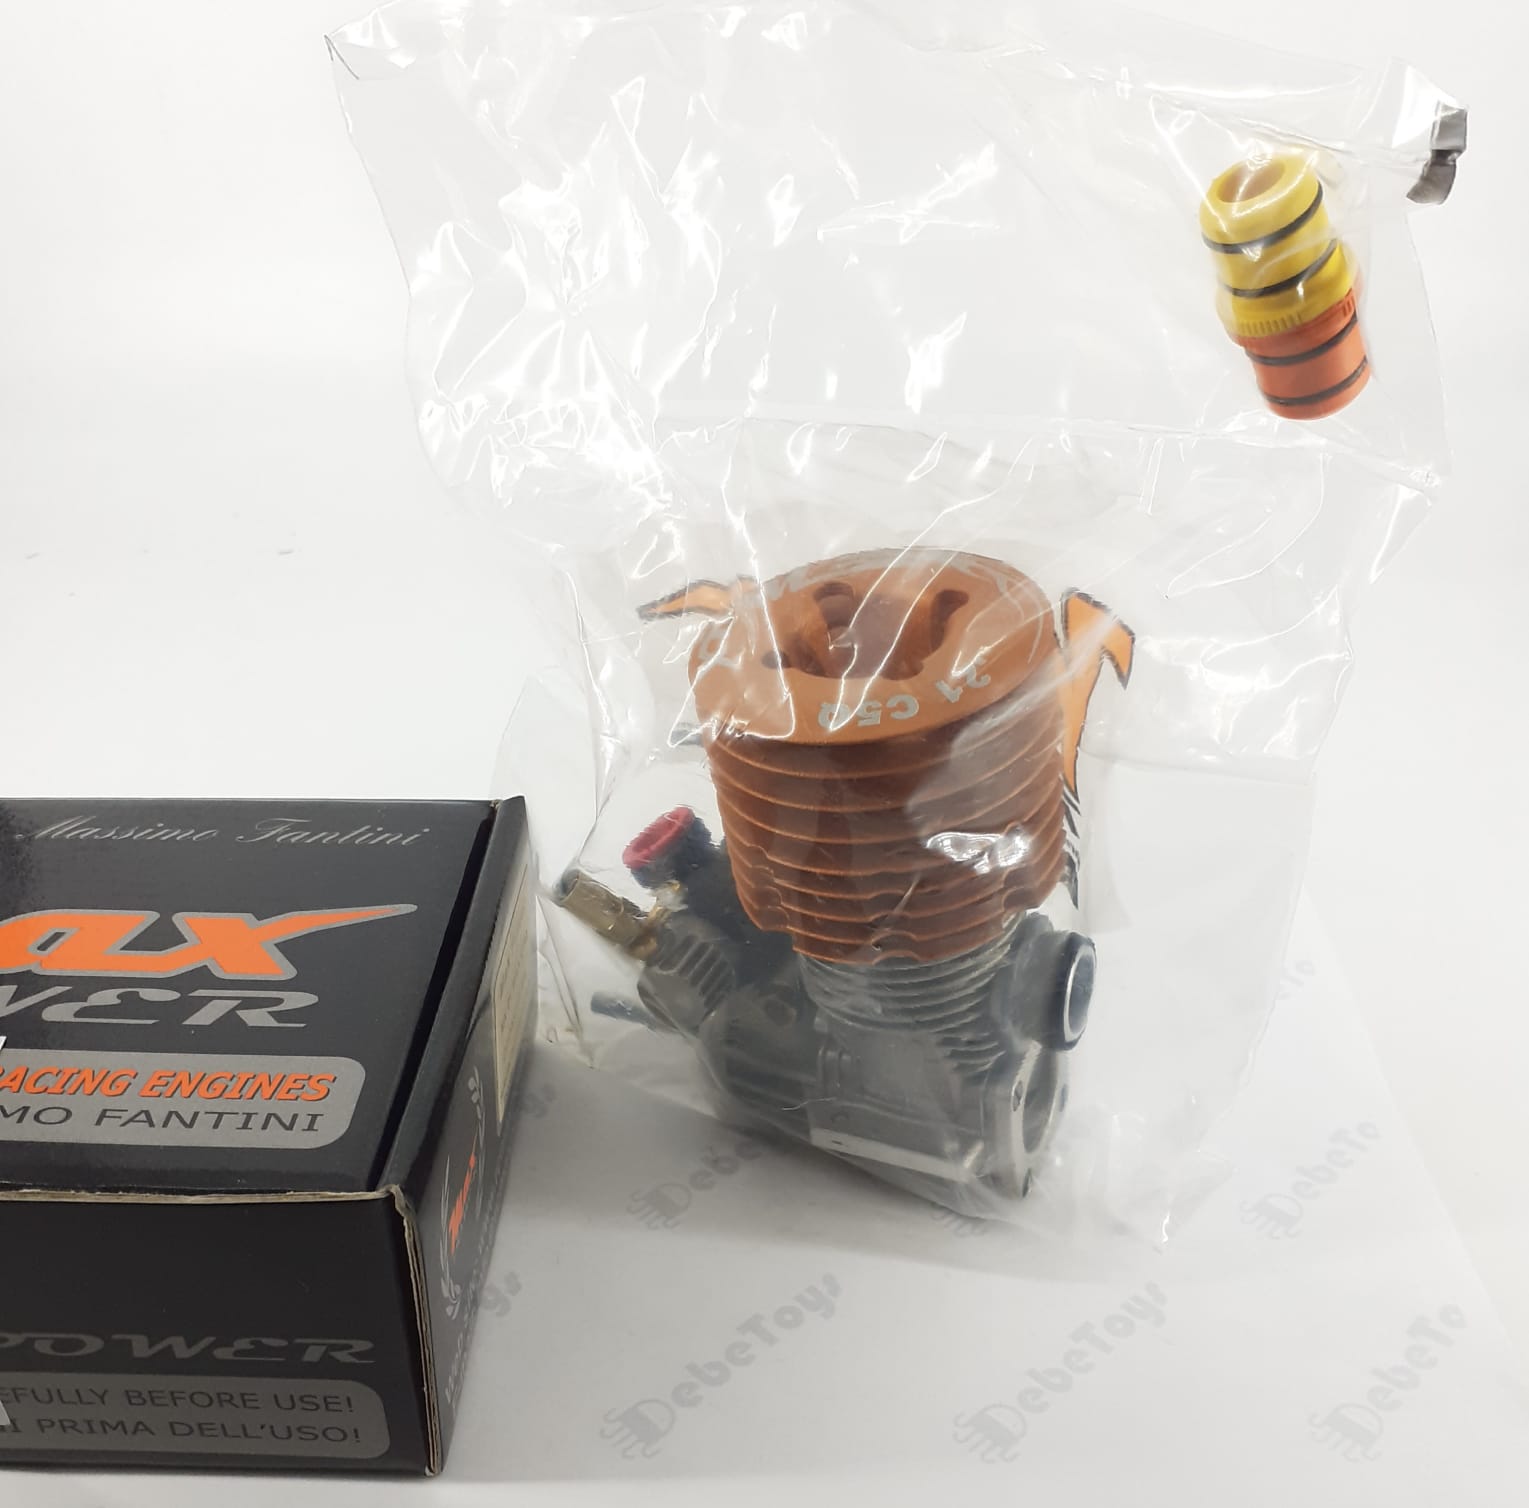 motore Max Power MX 21 MAX C5Q diamond coating